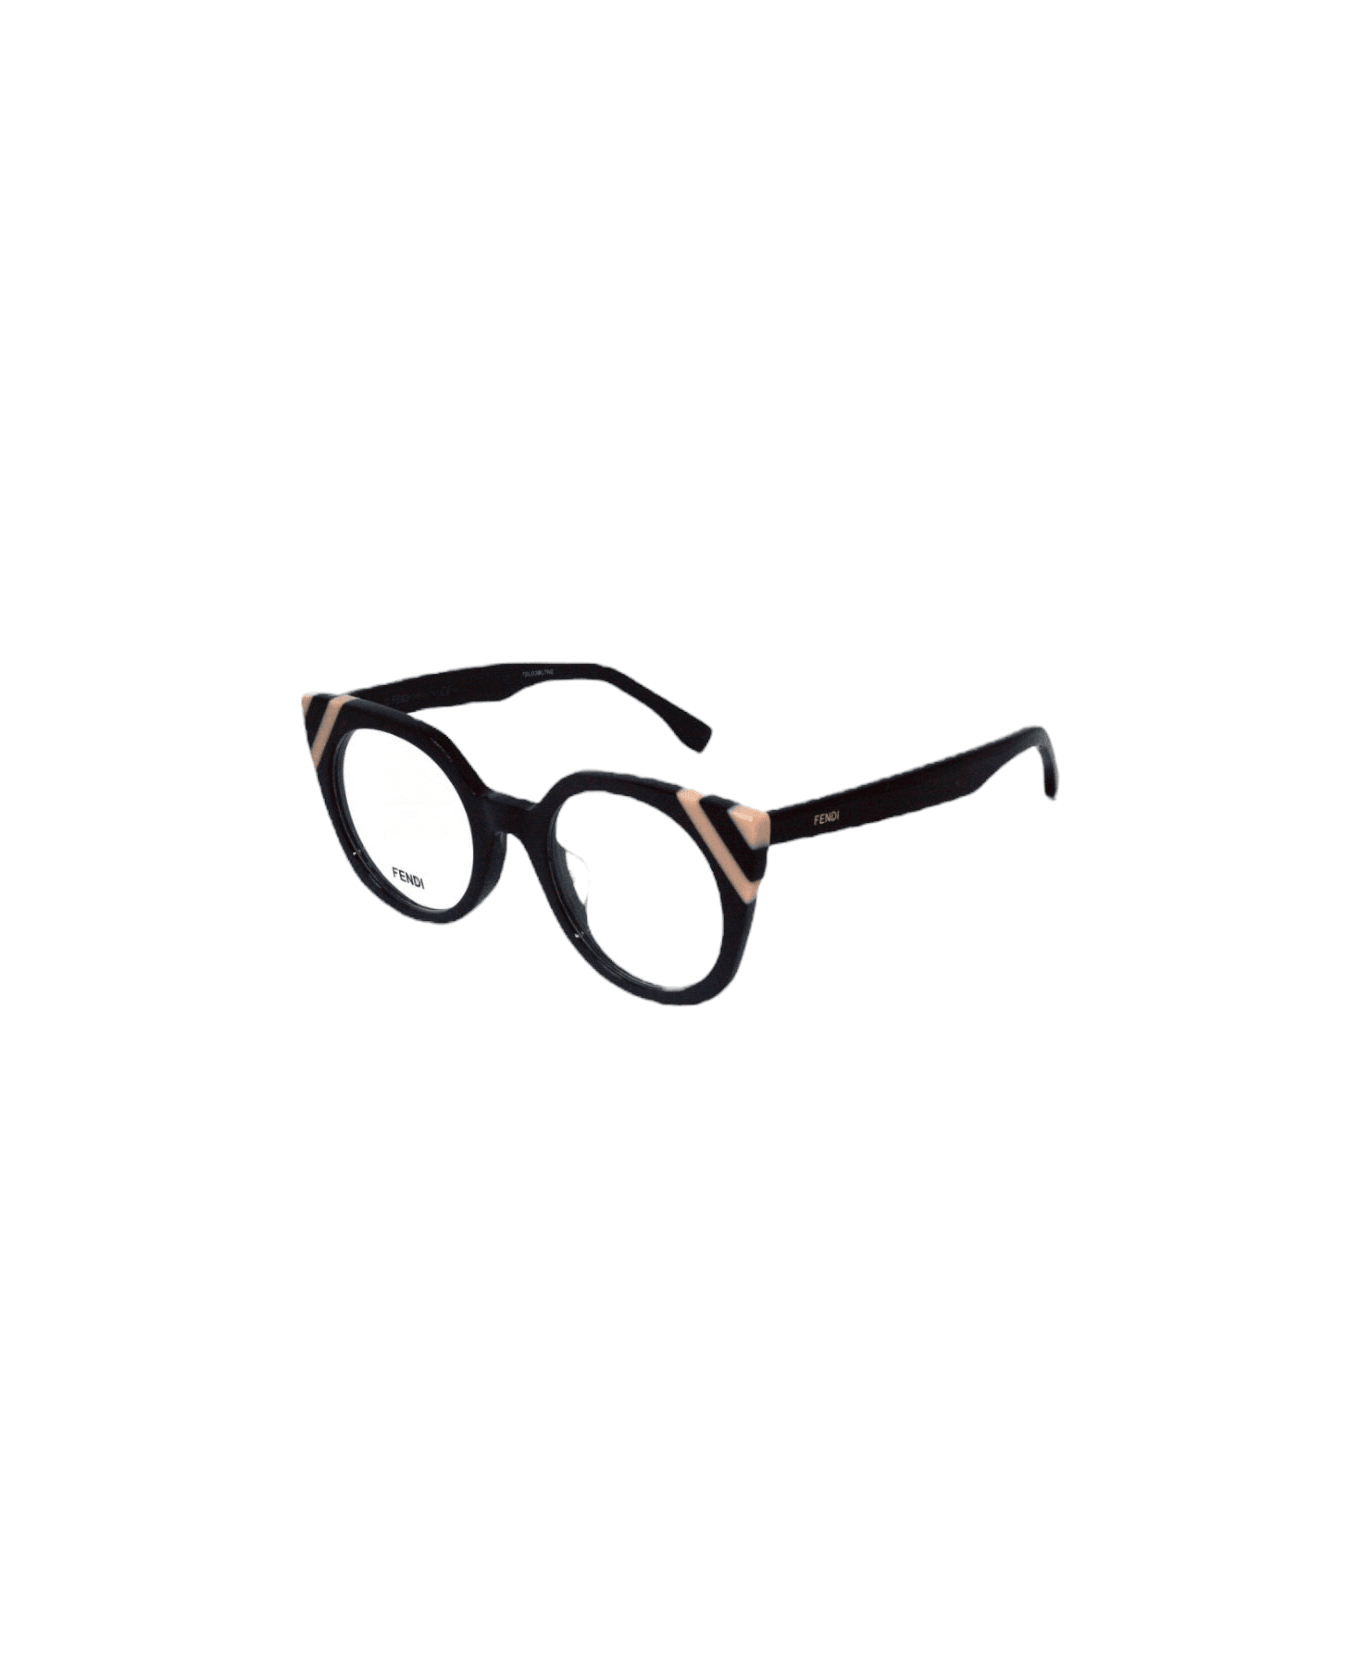 Fendi Eyewear Ff 0246 - Grey Glasses アイウェア